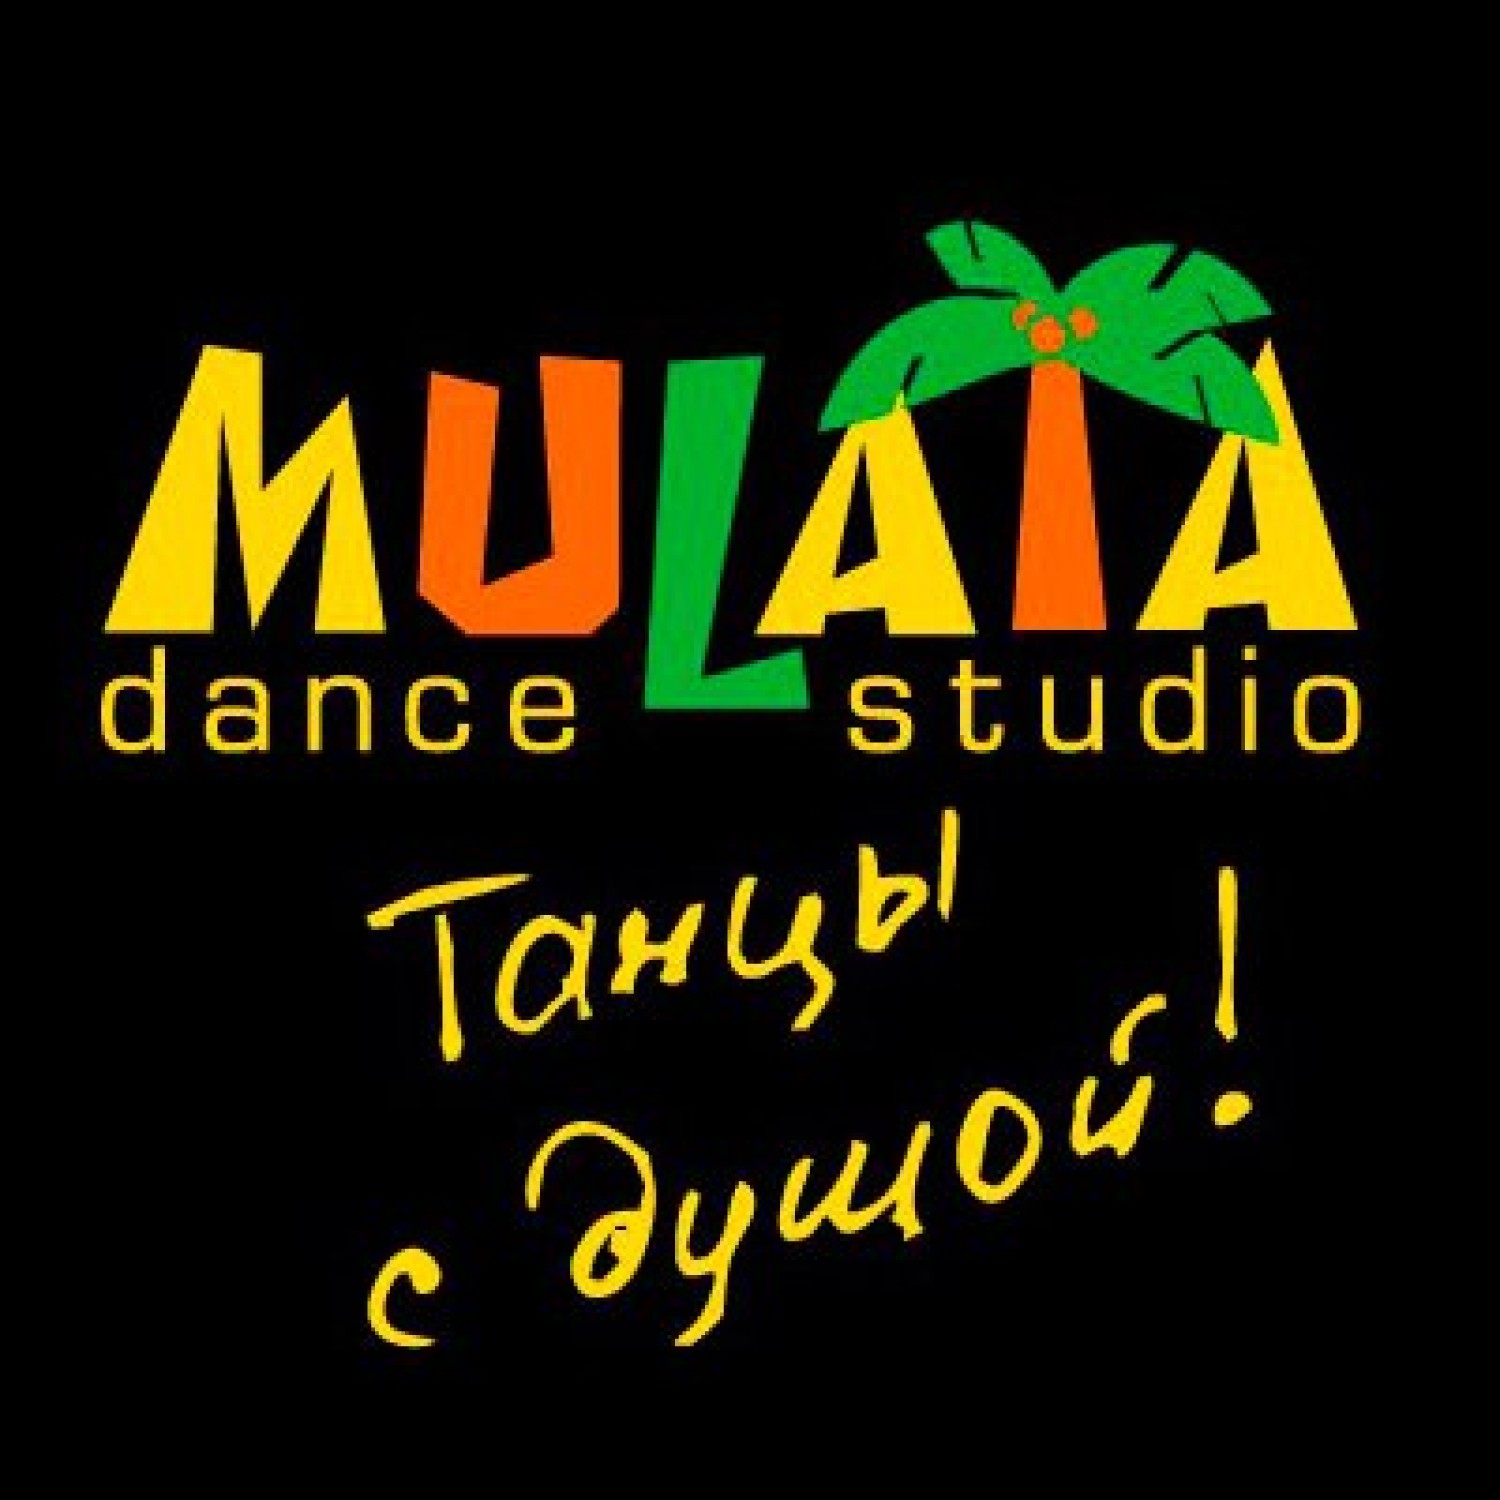 Mulata dance studio